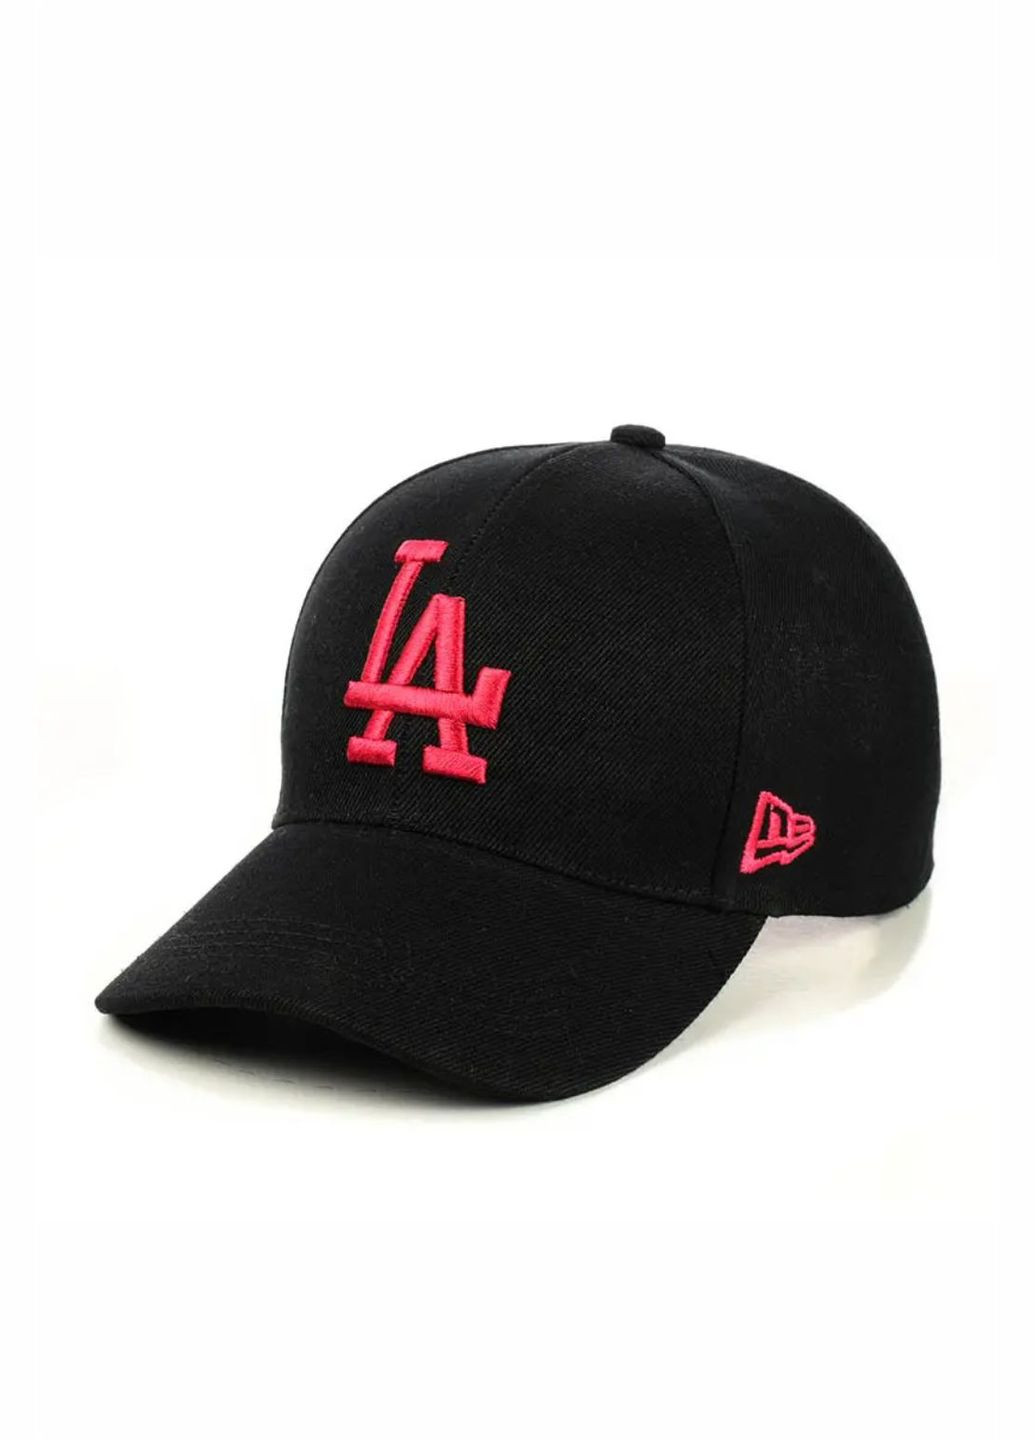 Кепка молодежная Лос Анджелес / Los Angeles M/L No Brand кепка унісекс (282842661)